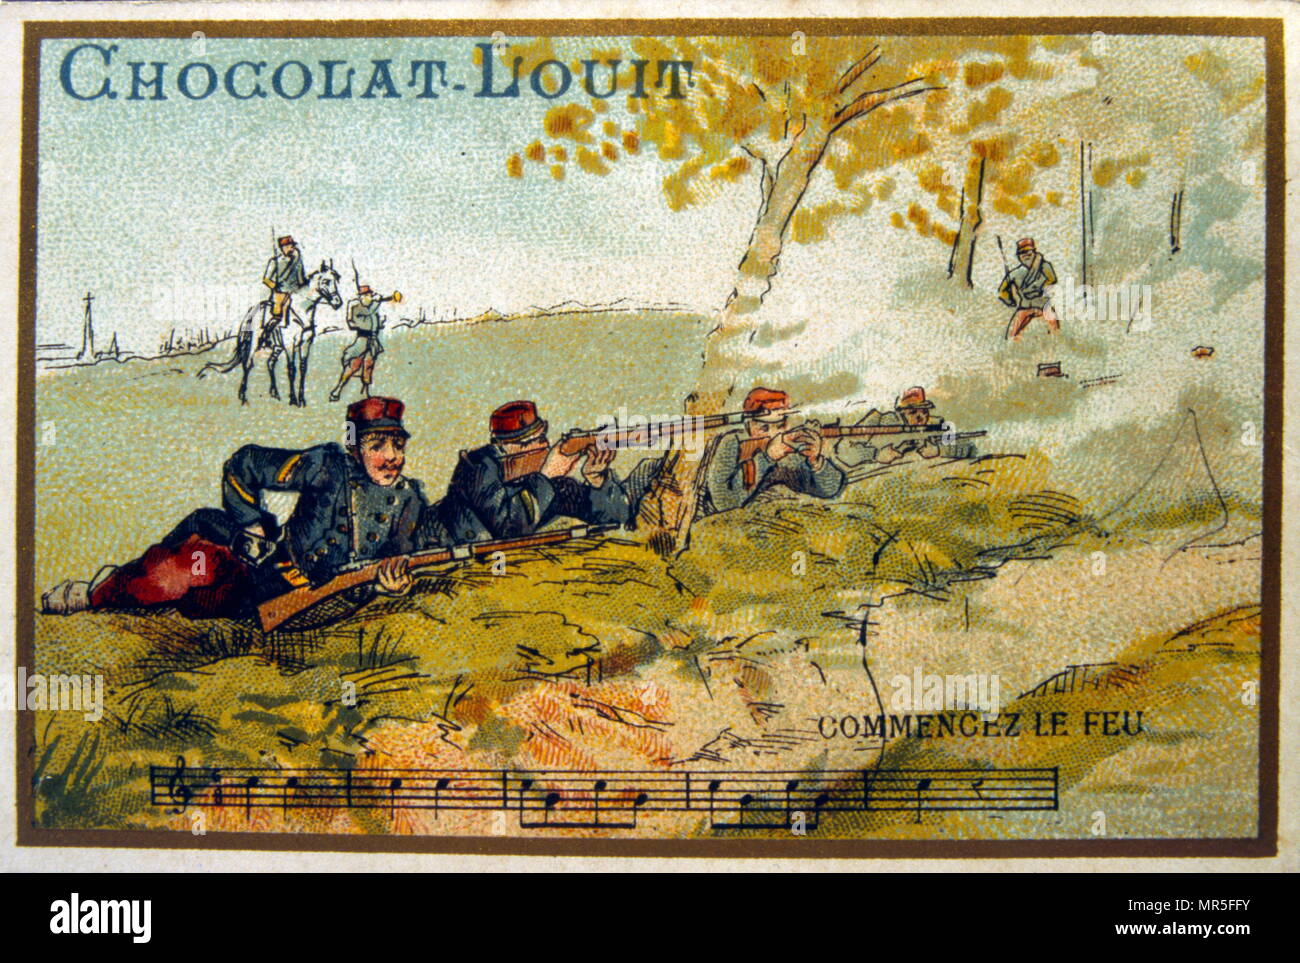 Chromolithograph desde una envoltura de chocolate, circa 1900, representando a los soldados franceses en acción disparando fusiles Foto de stock